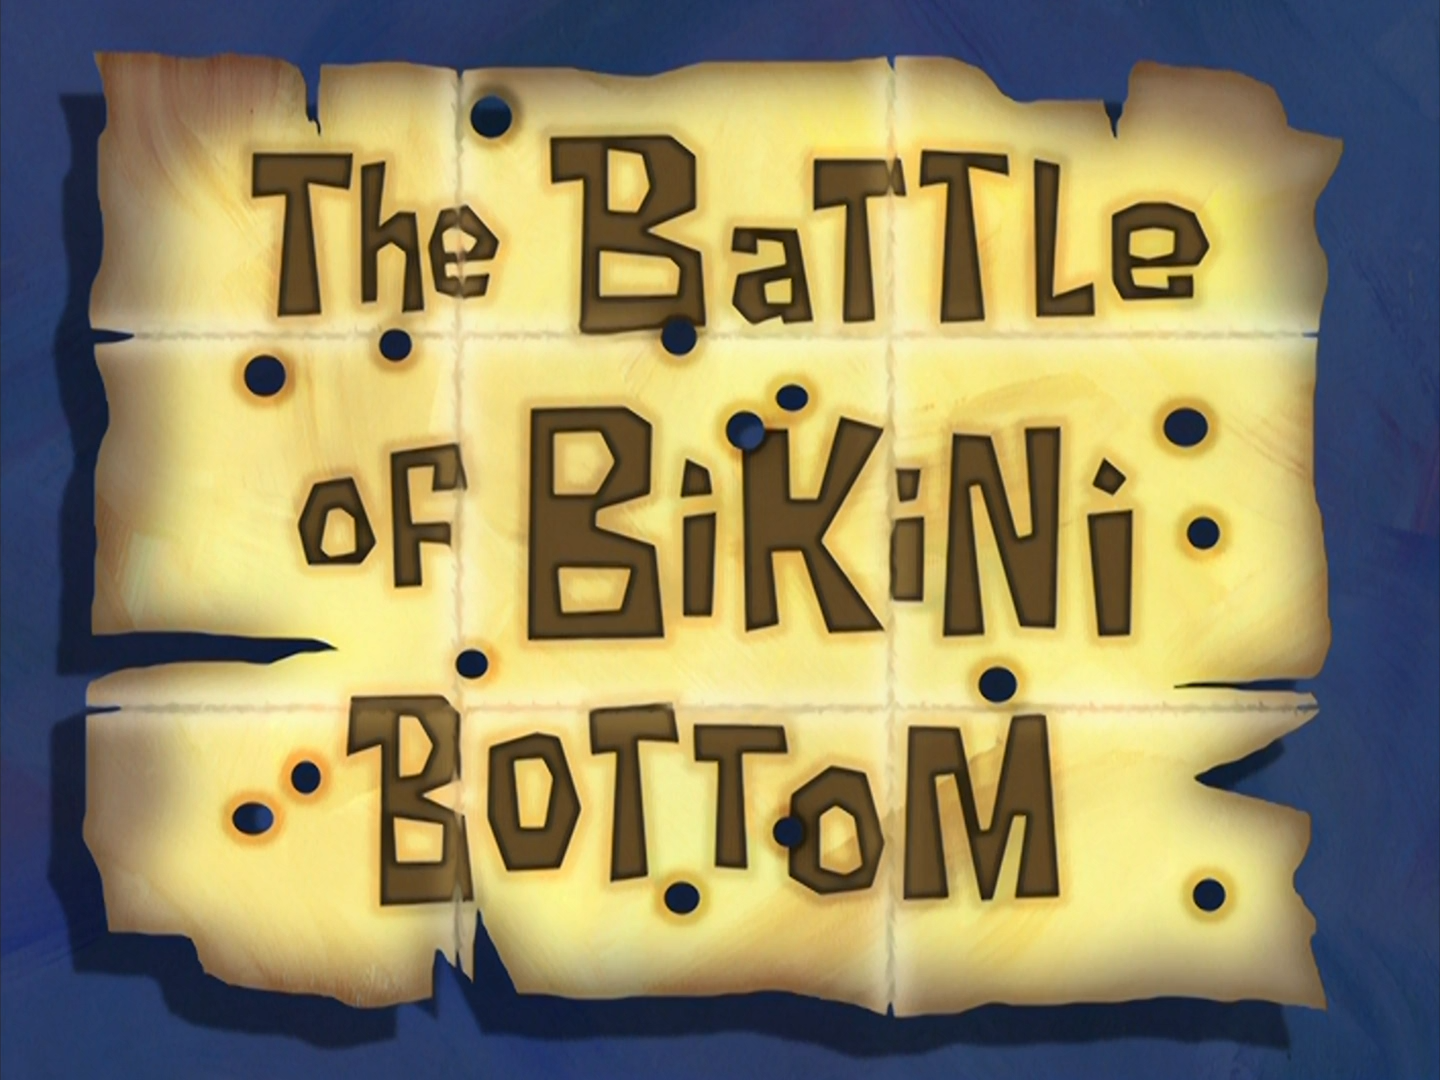 Bikini bottom shit. Battle Bikini bottom. "The Battle of Bikini bottom" Episode. "The Battle of Bikini bottom" Episode Spongebob тыщечи кадров. "The Battle of Bikini bottom" Episode Spongebob.